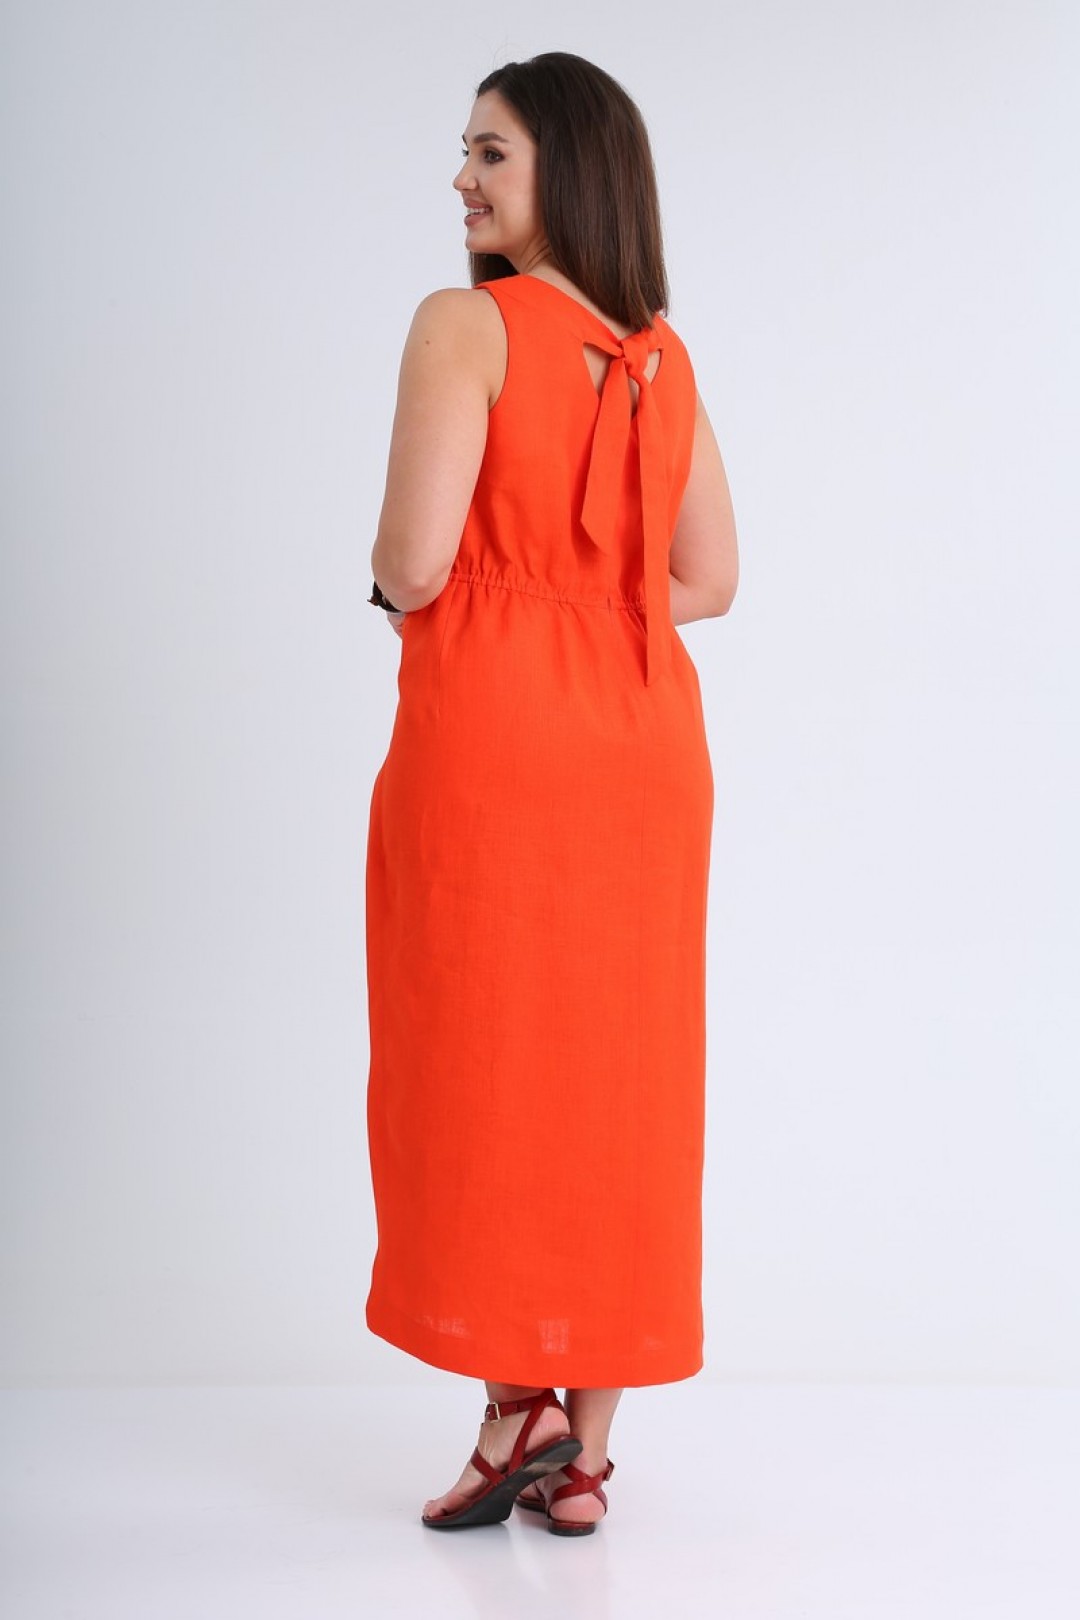 Платье MALI 421-054 оранжевый